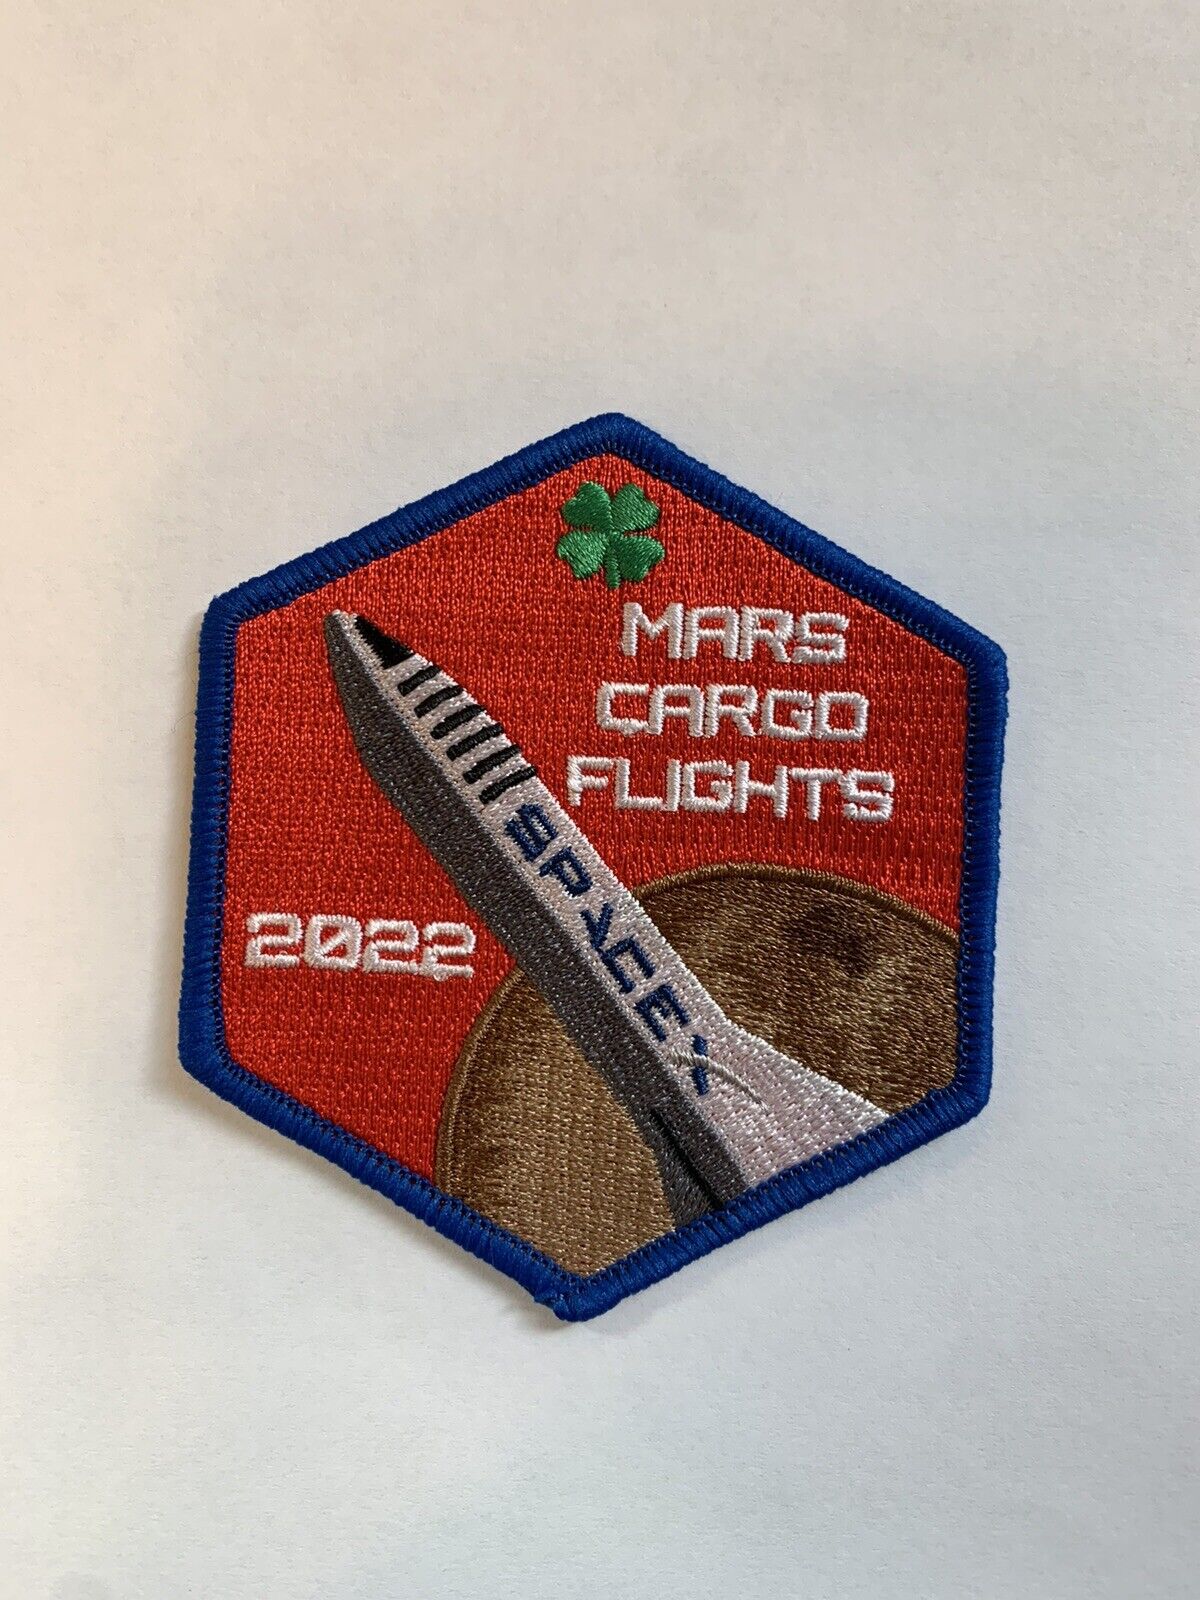 SPACEX MARS STARSHIP CARGO MISSIONS 2022 3.5” NASA BFR SN12